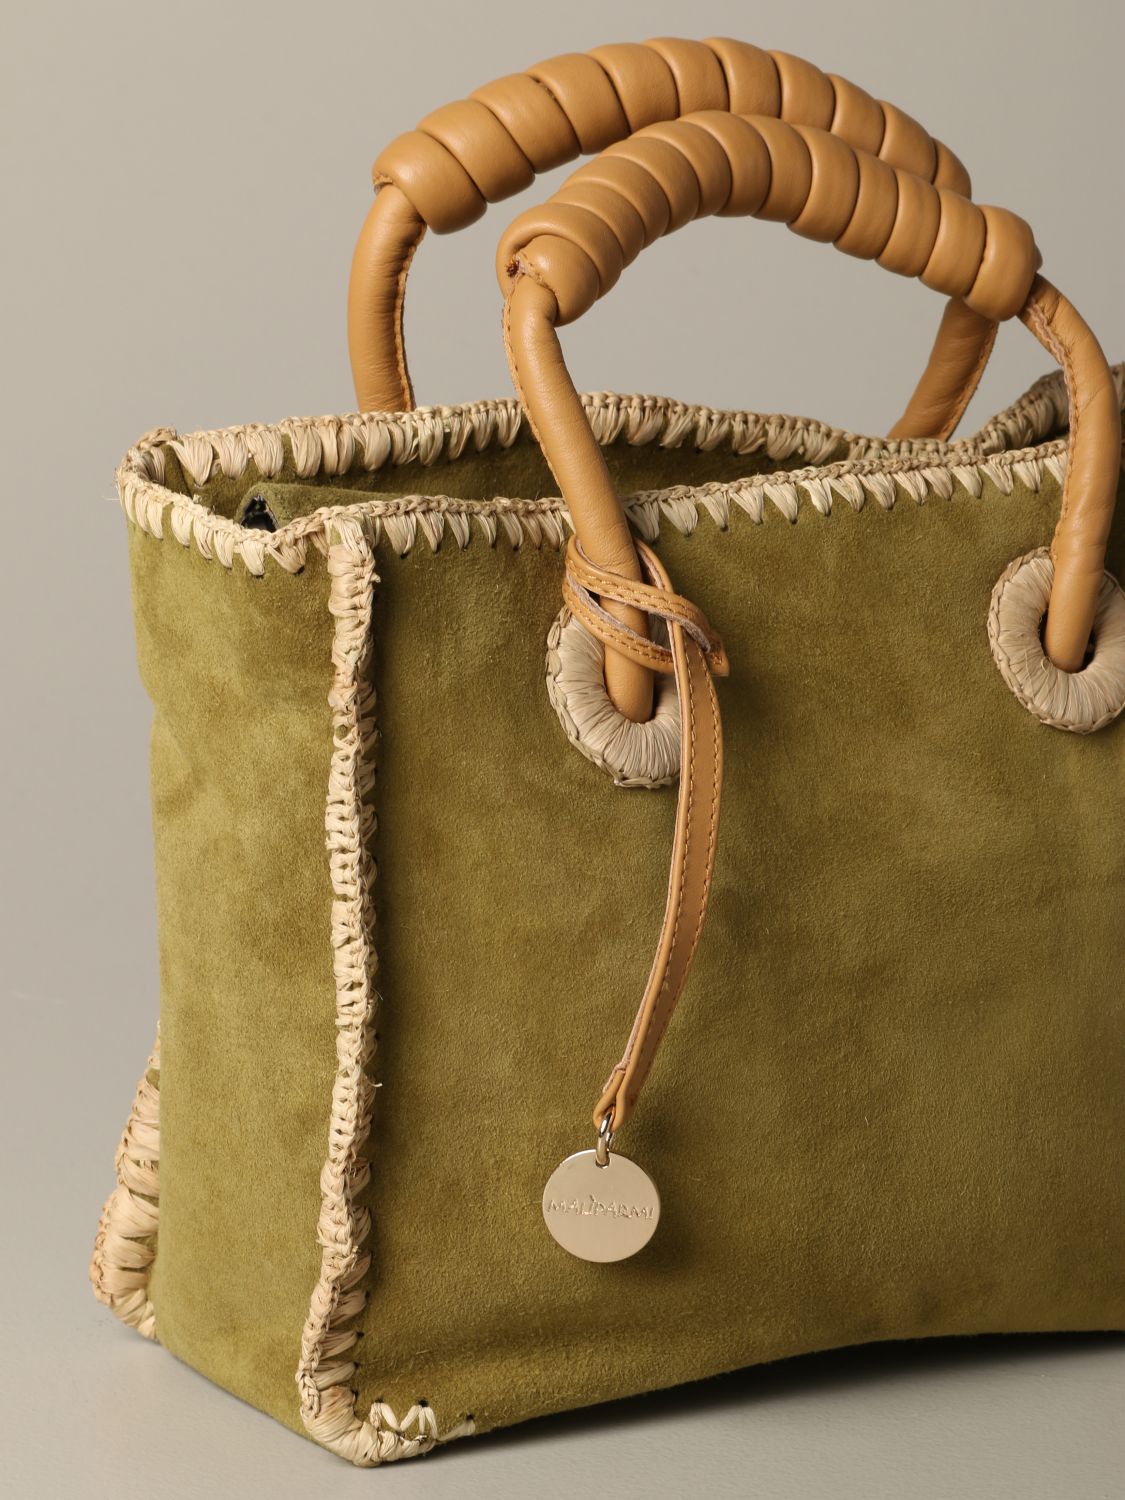 Maliparmi Outlet: Shoulder bag women - Olive | Handbag Maliparmi ...